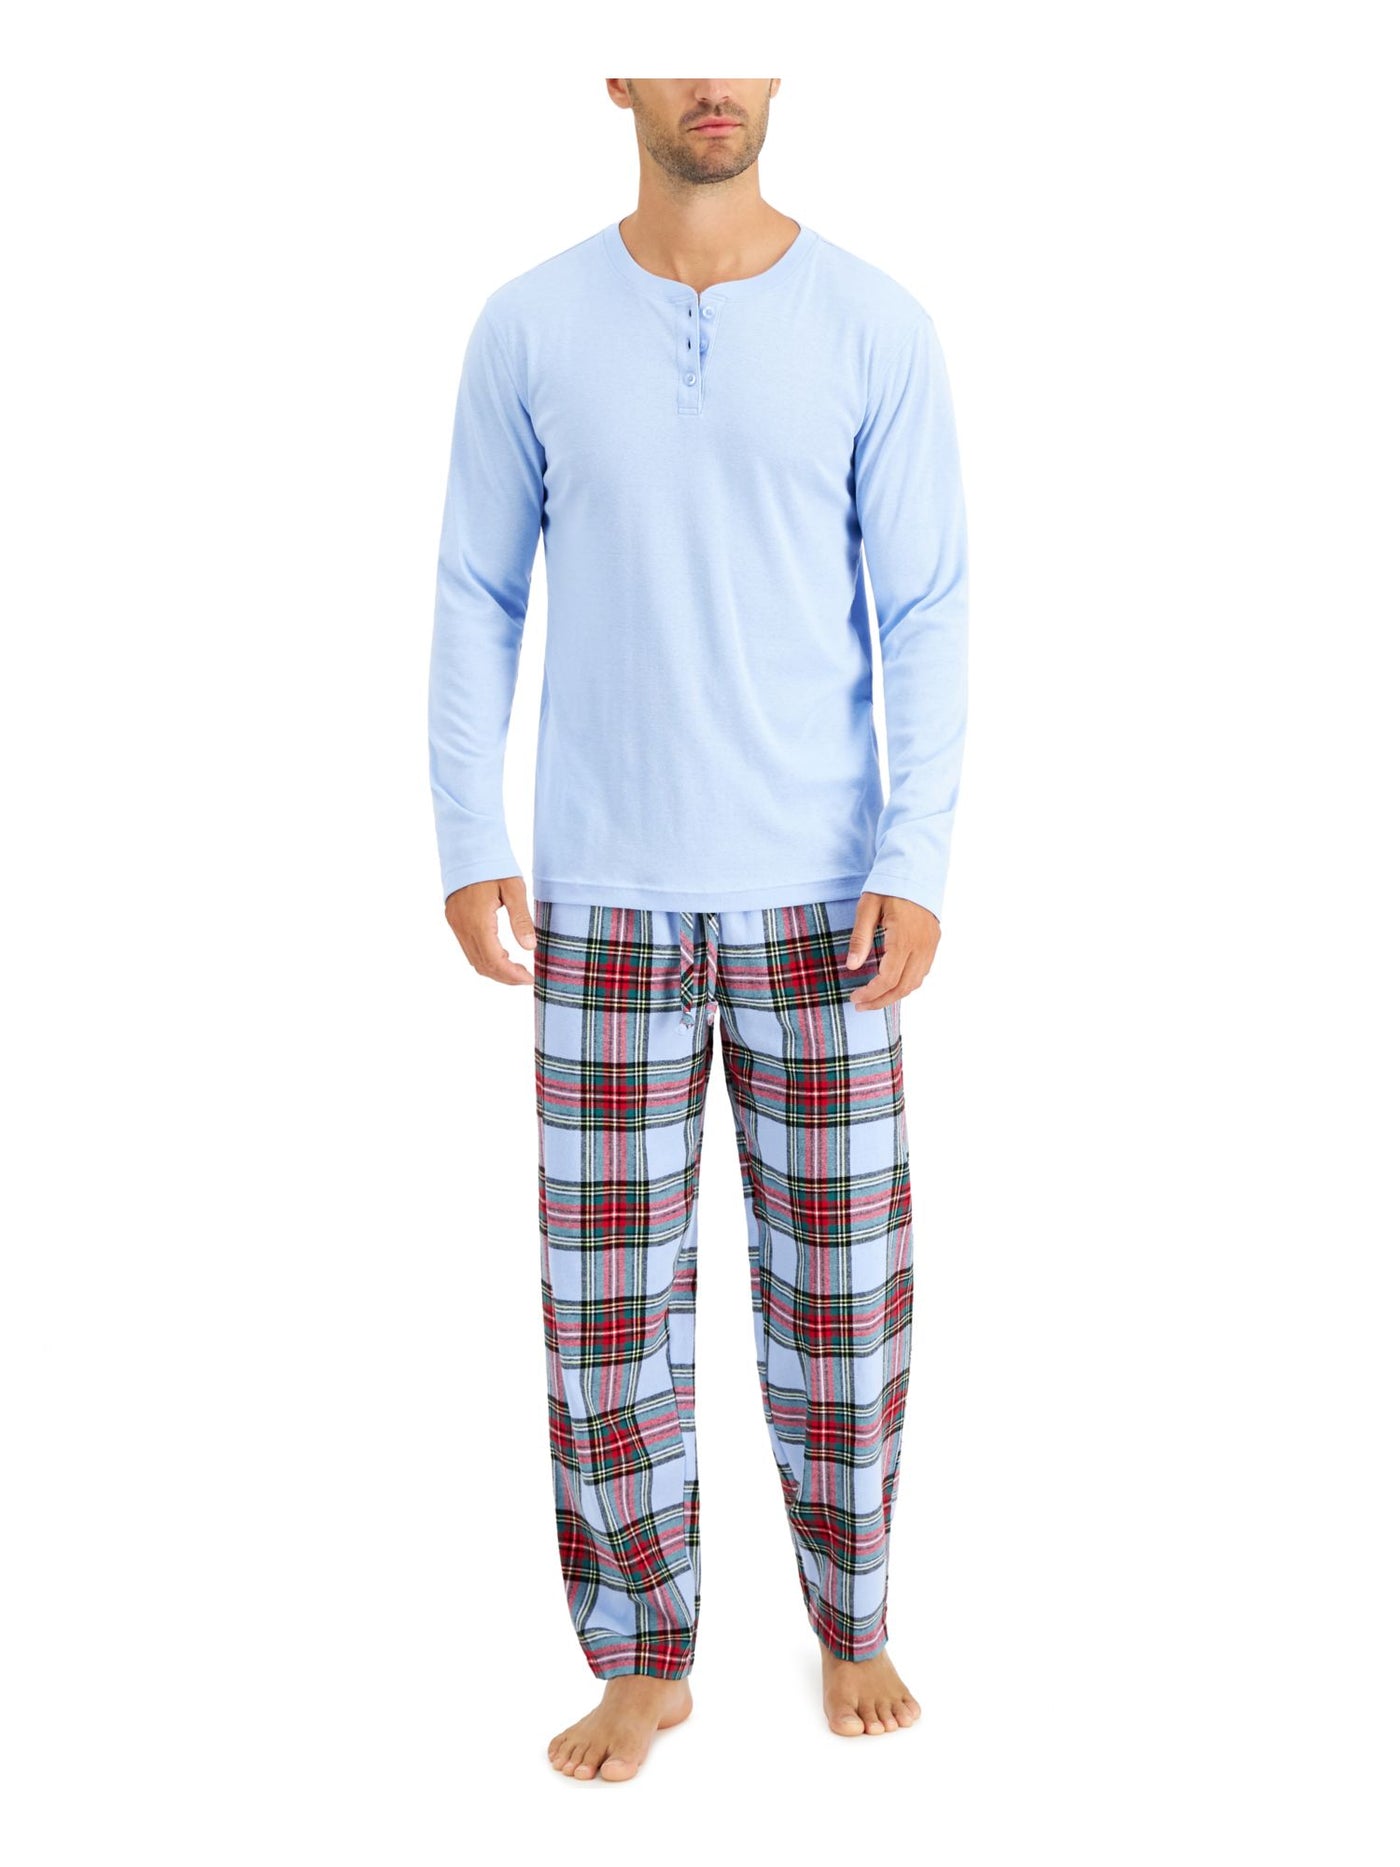 FAMILY PJs Mens Light Blue Top Drawstring Long Sleeve Straight leg Pants Pajamas L